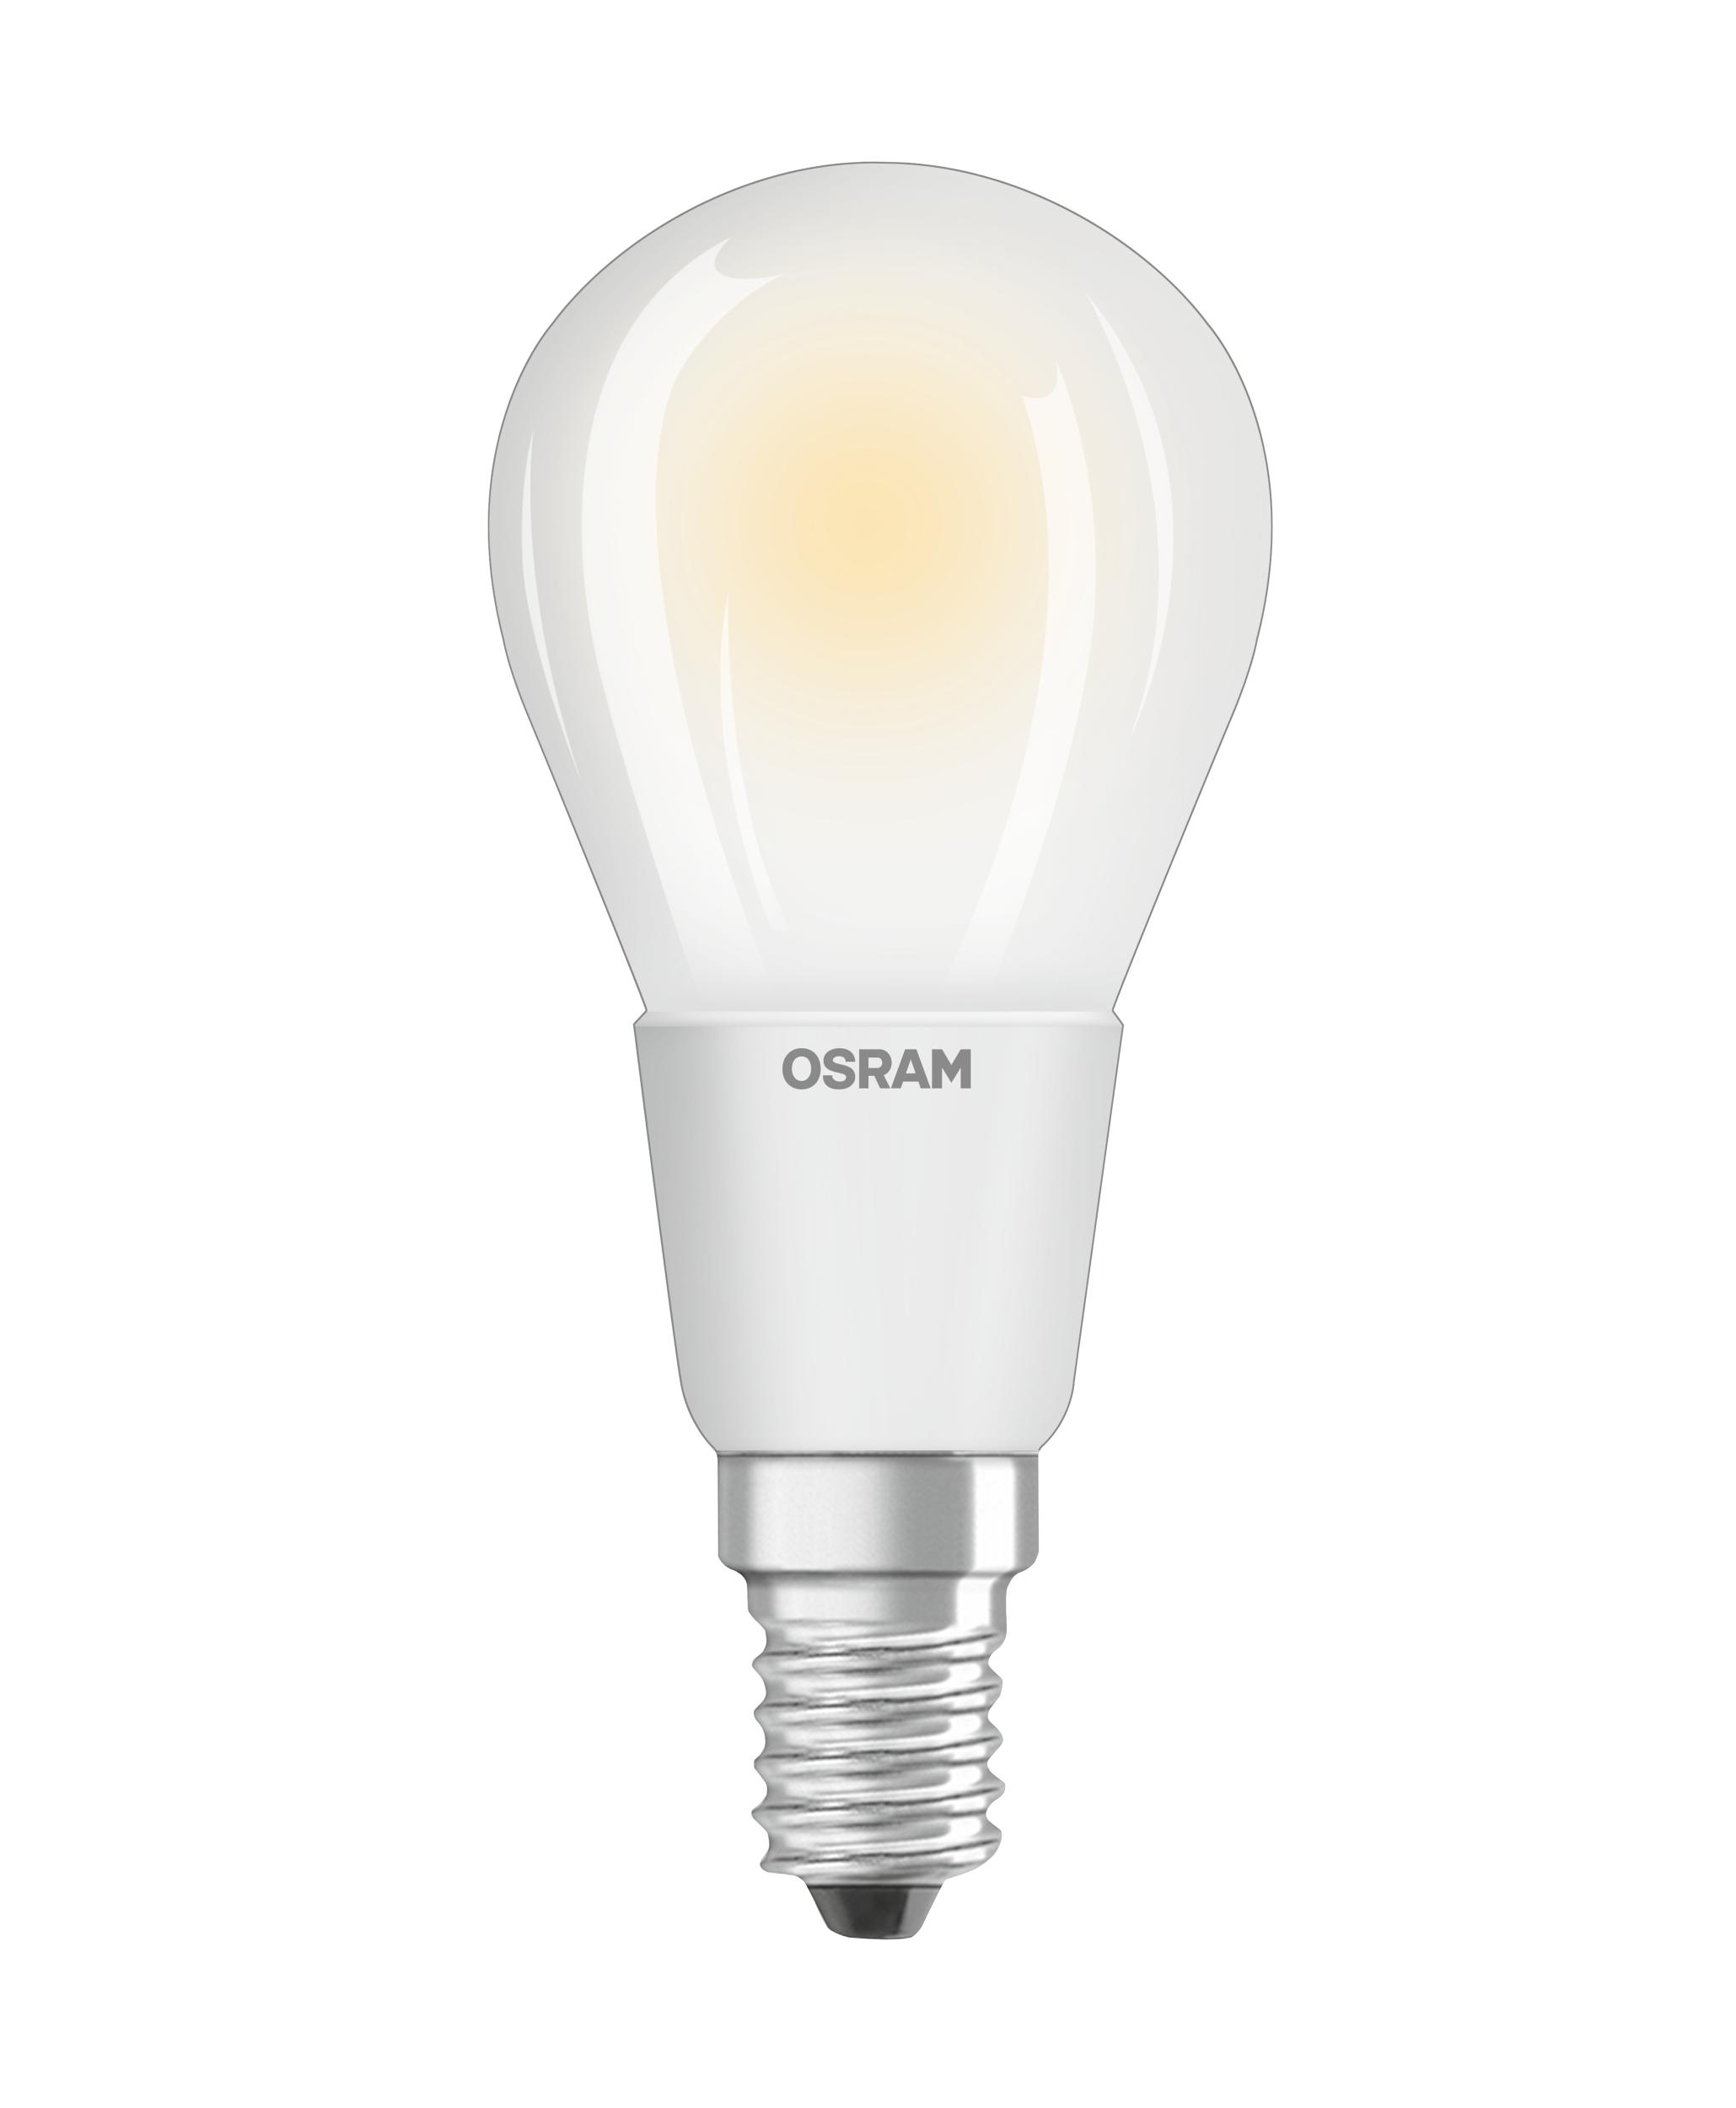 Osram OSRAM LED Superstar RETROFIT Classic P matt (dimmbar)